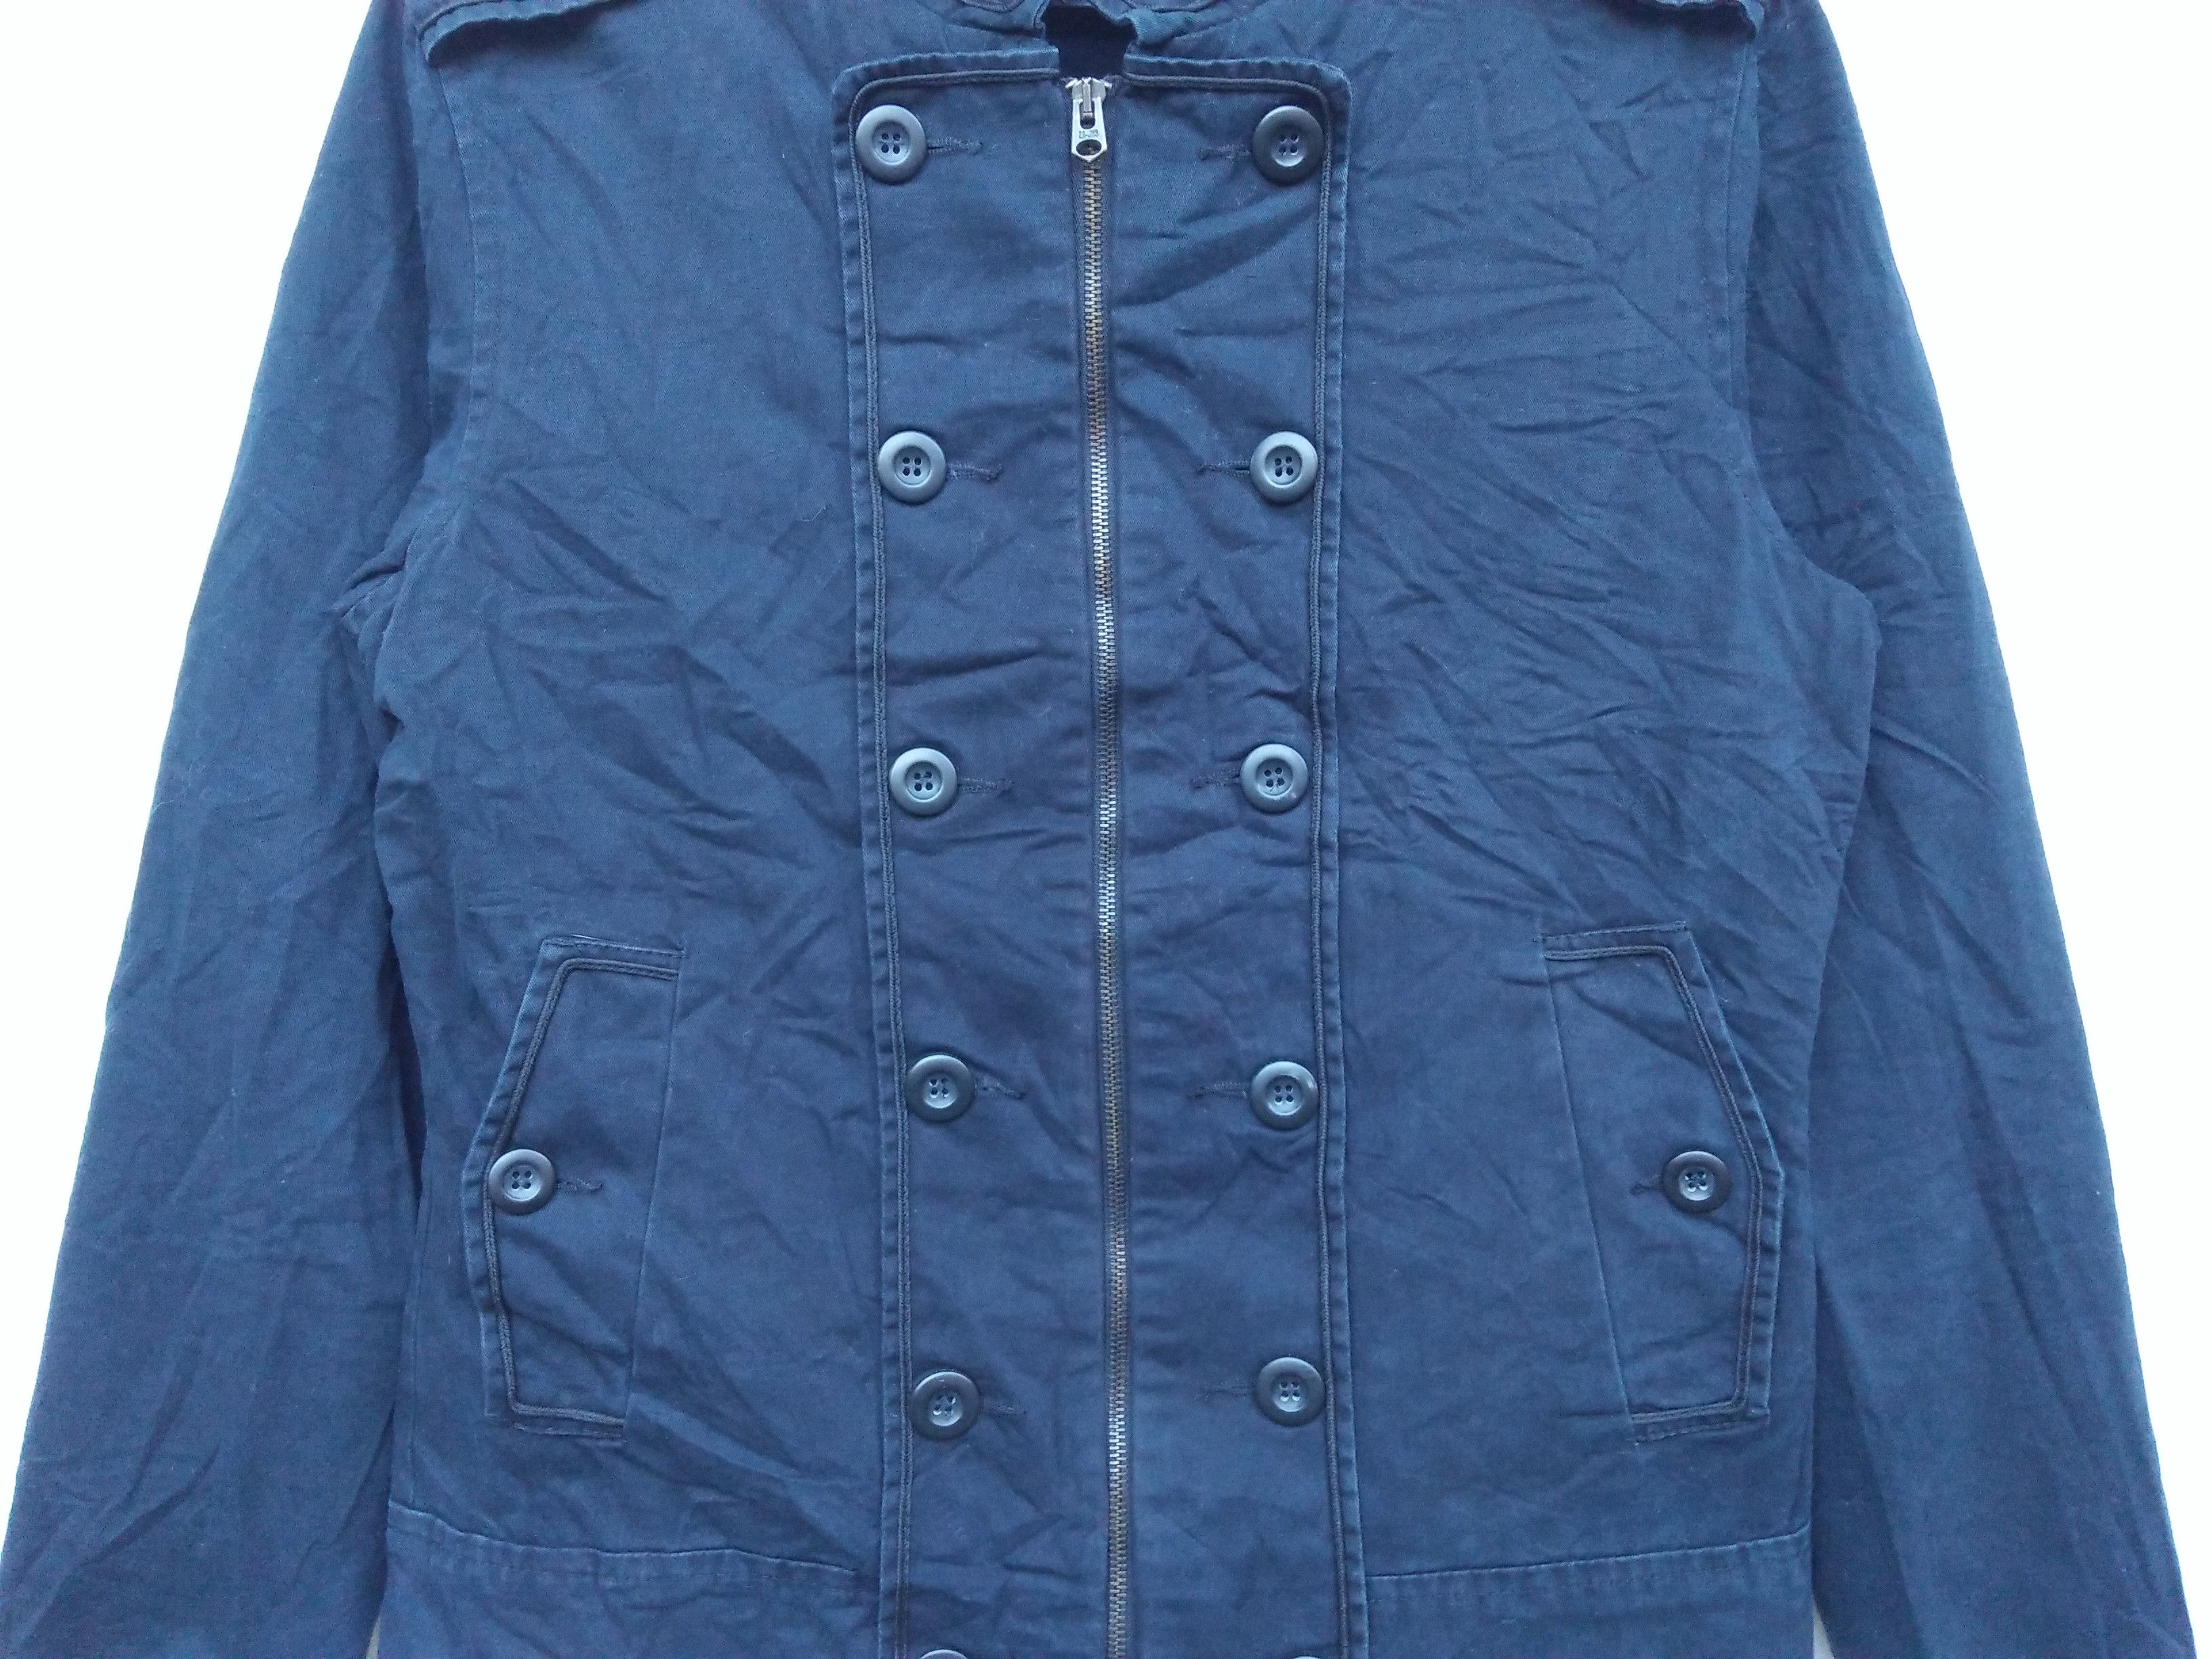 Zara Zara Man denim jacket nice design Size US M / EU 48-50 / 2 - 2 Preview